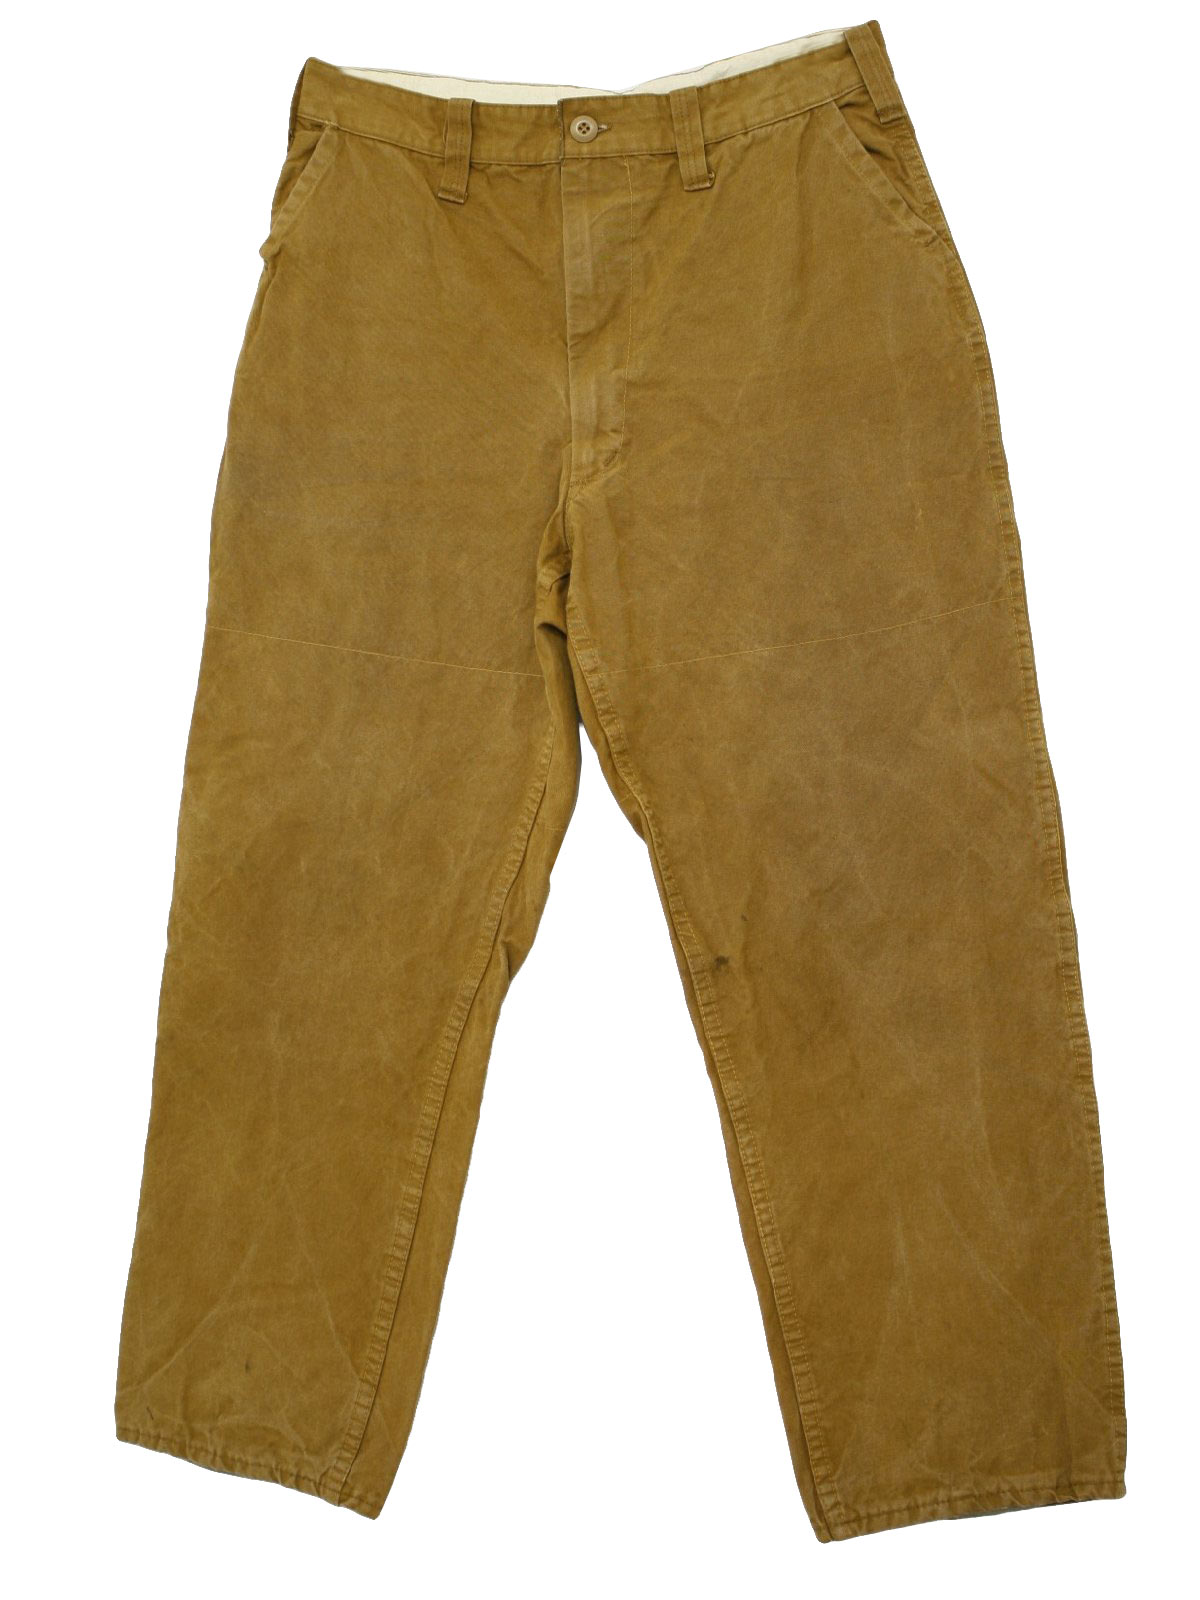 Retro Sixties Pants: 60s style (made in 70s) -SafTbak- Mens water ...